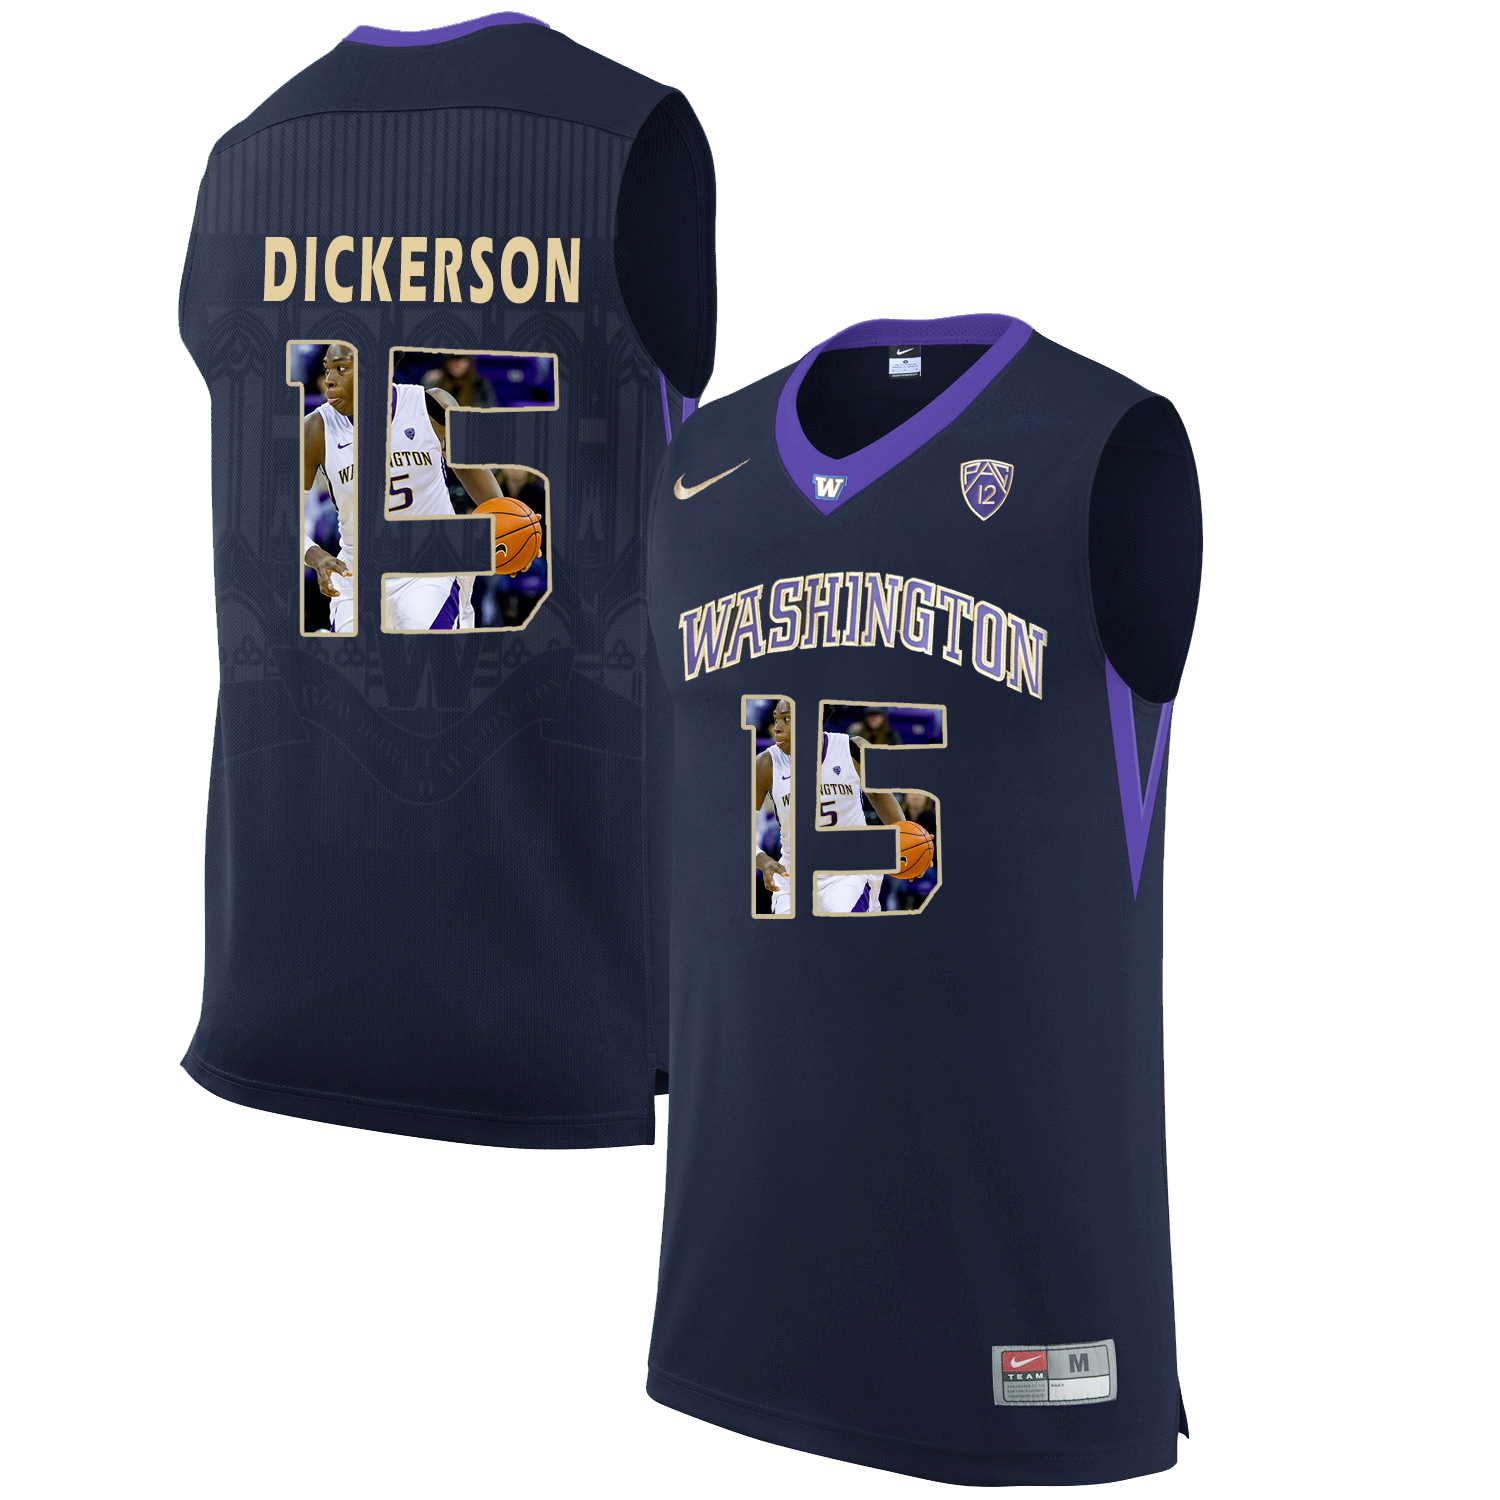 Washington Huskies 15 Noah Dickerson Black With Portait College Basketball Jersey